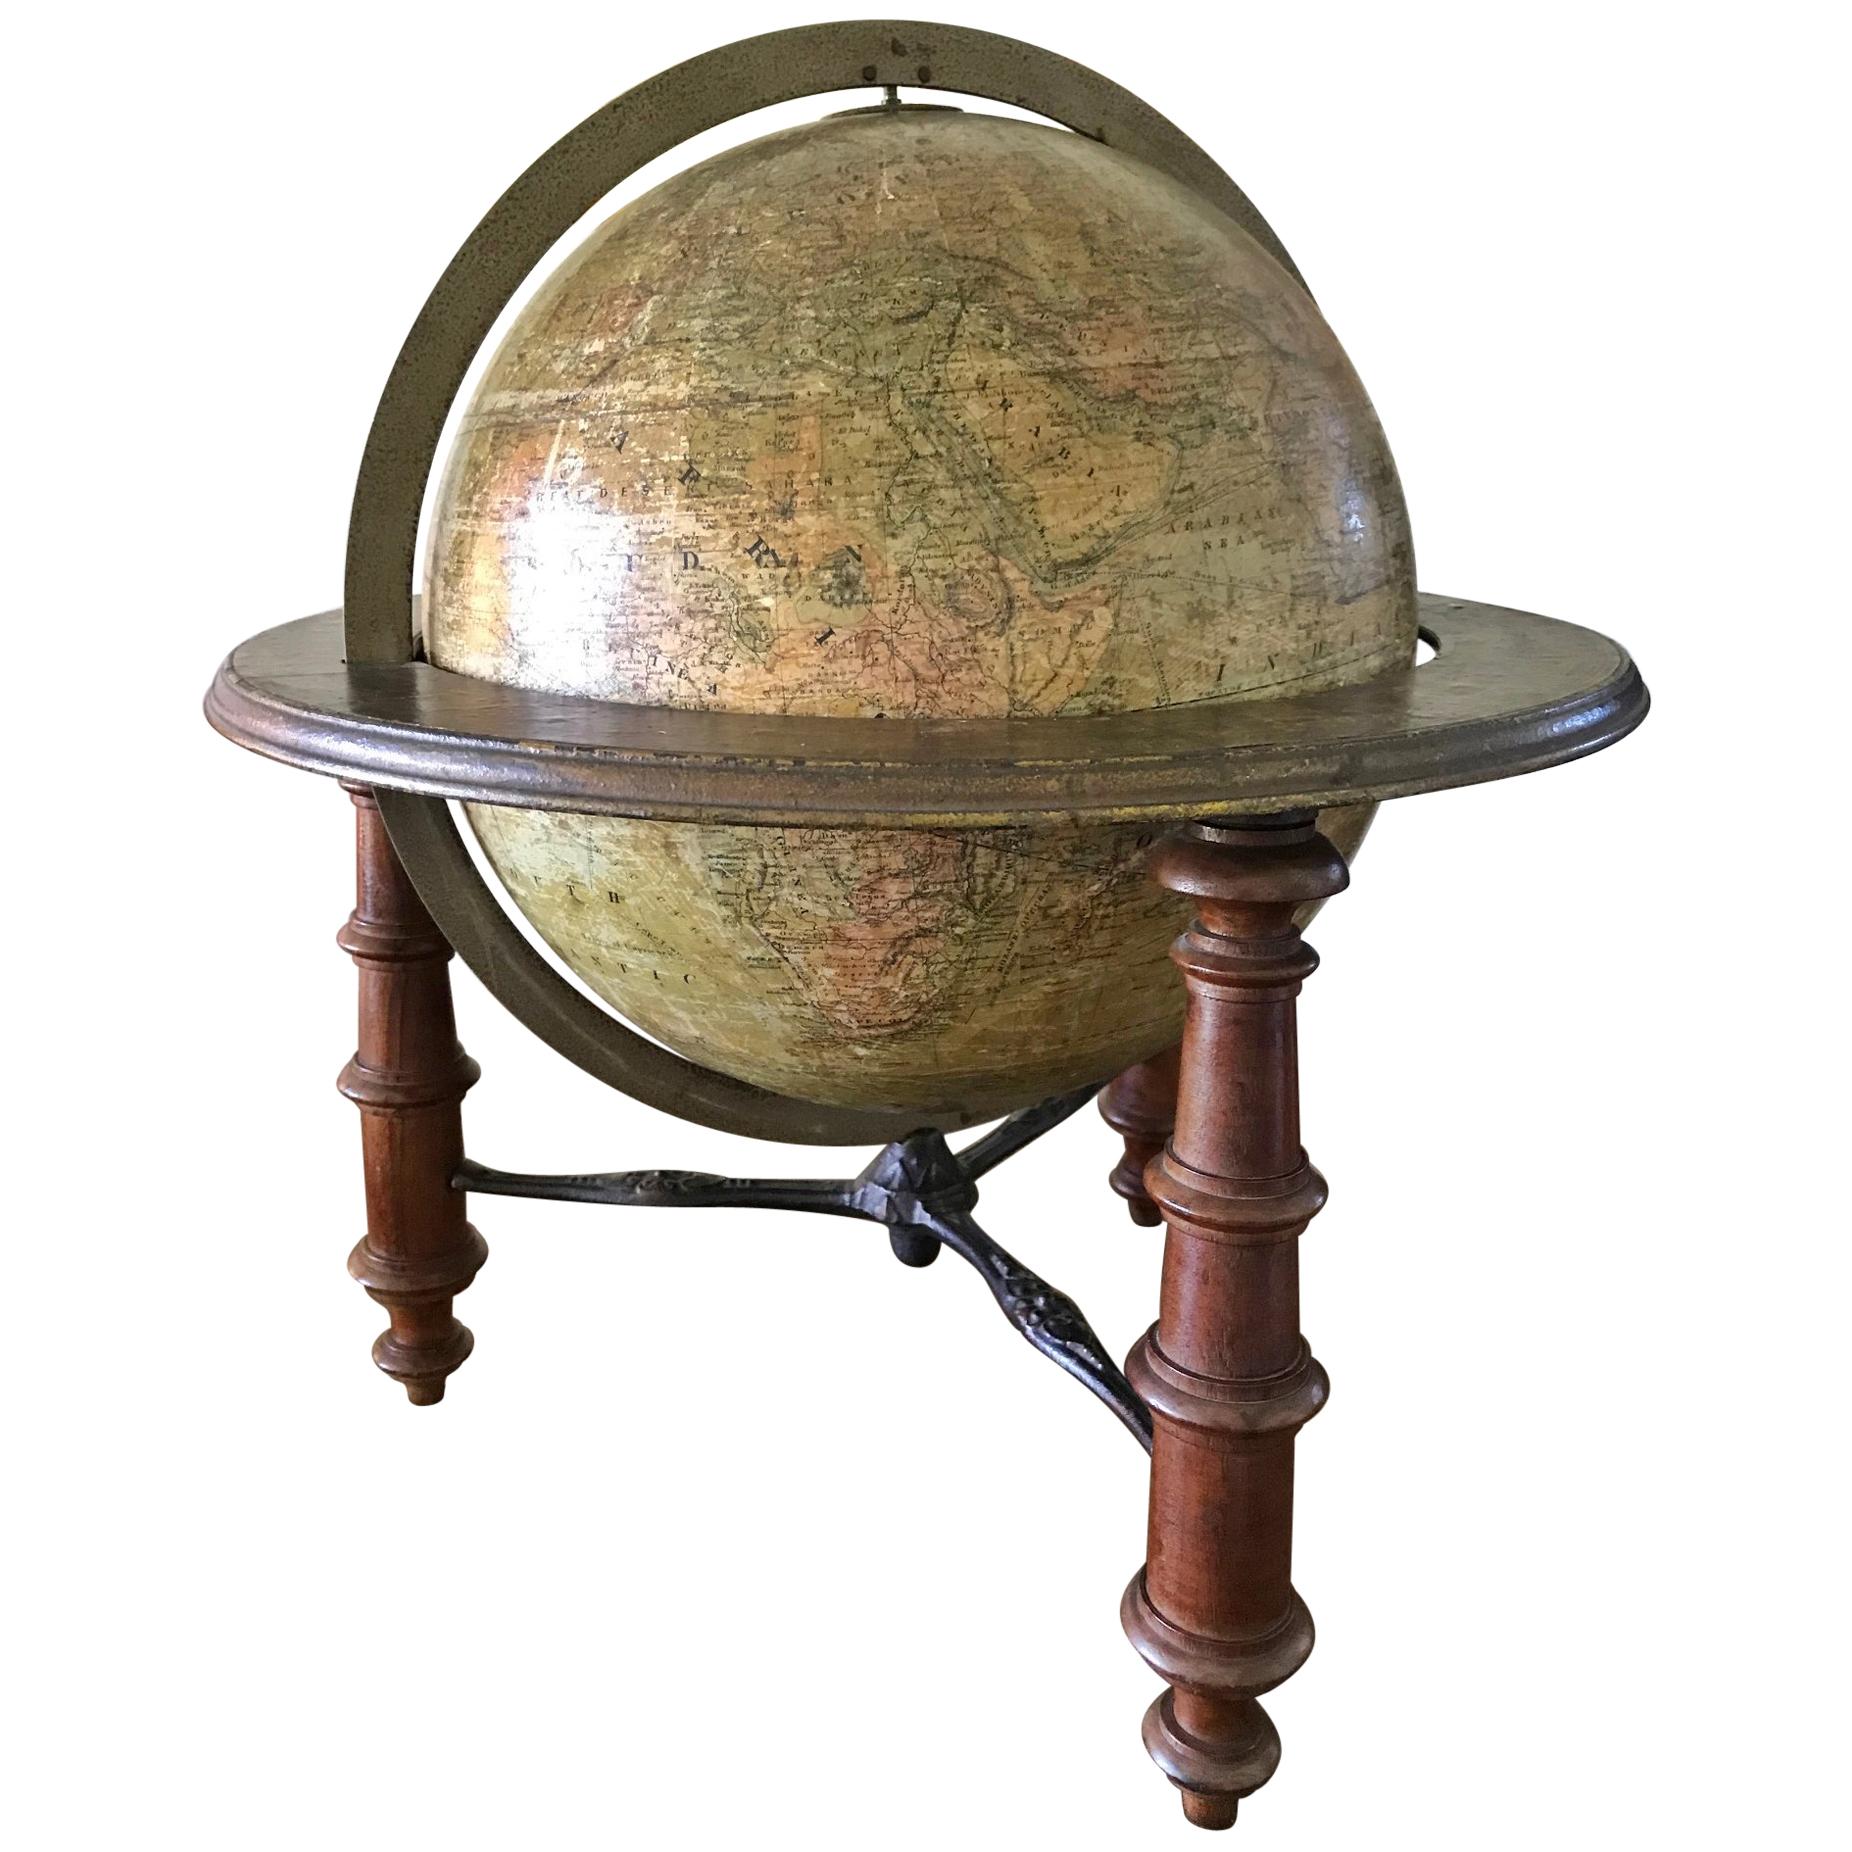 H. Schedler's Terrestrial Globe Copyright, 1889 For Sale